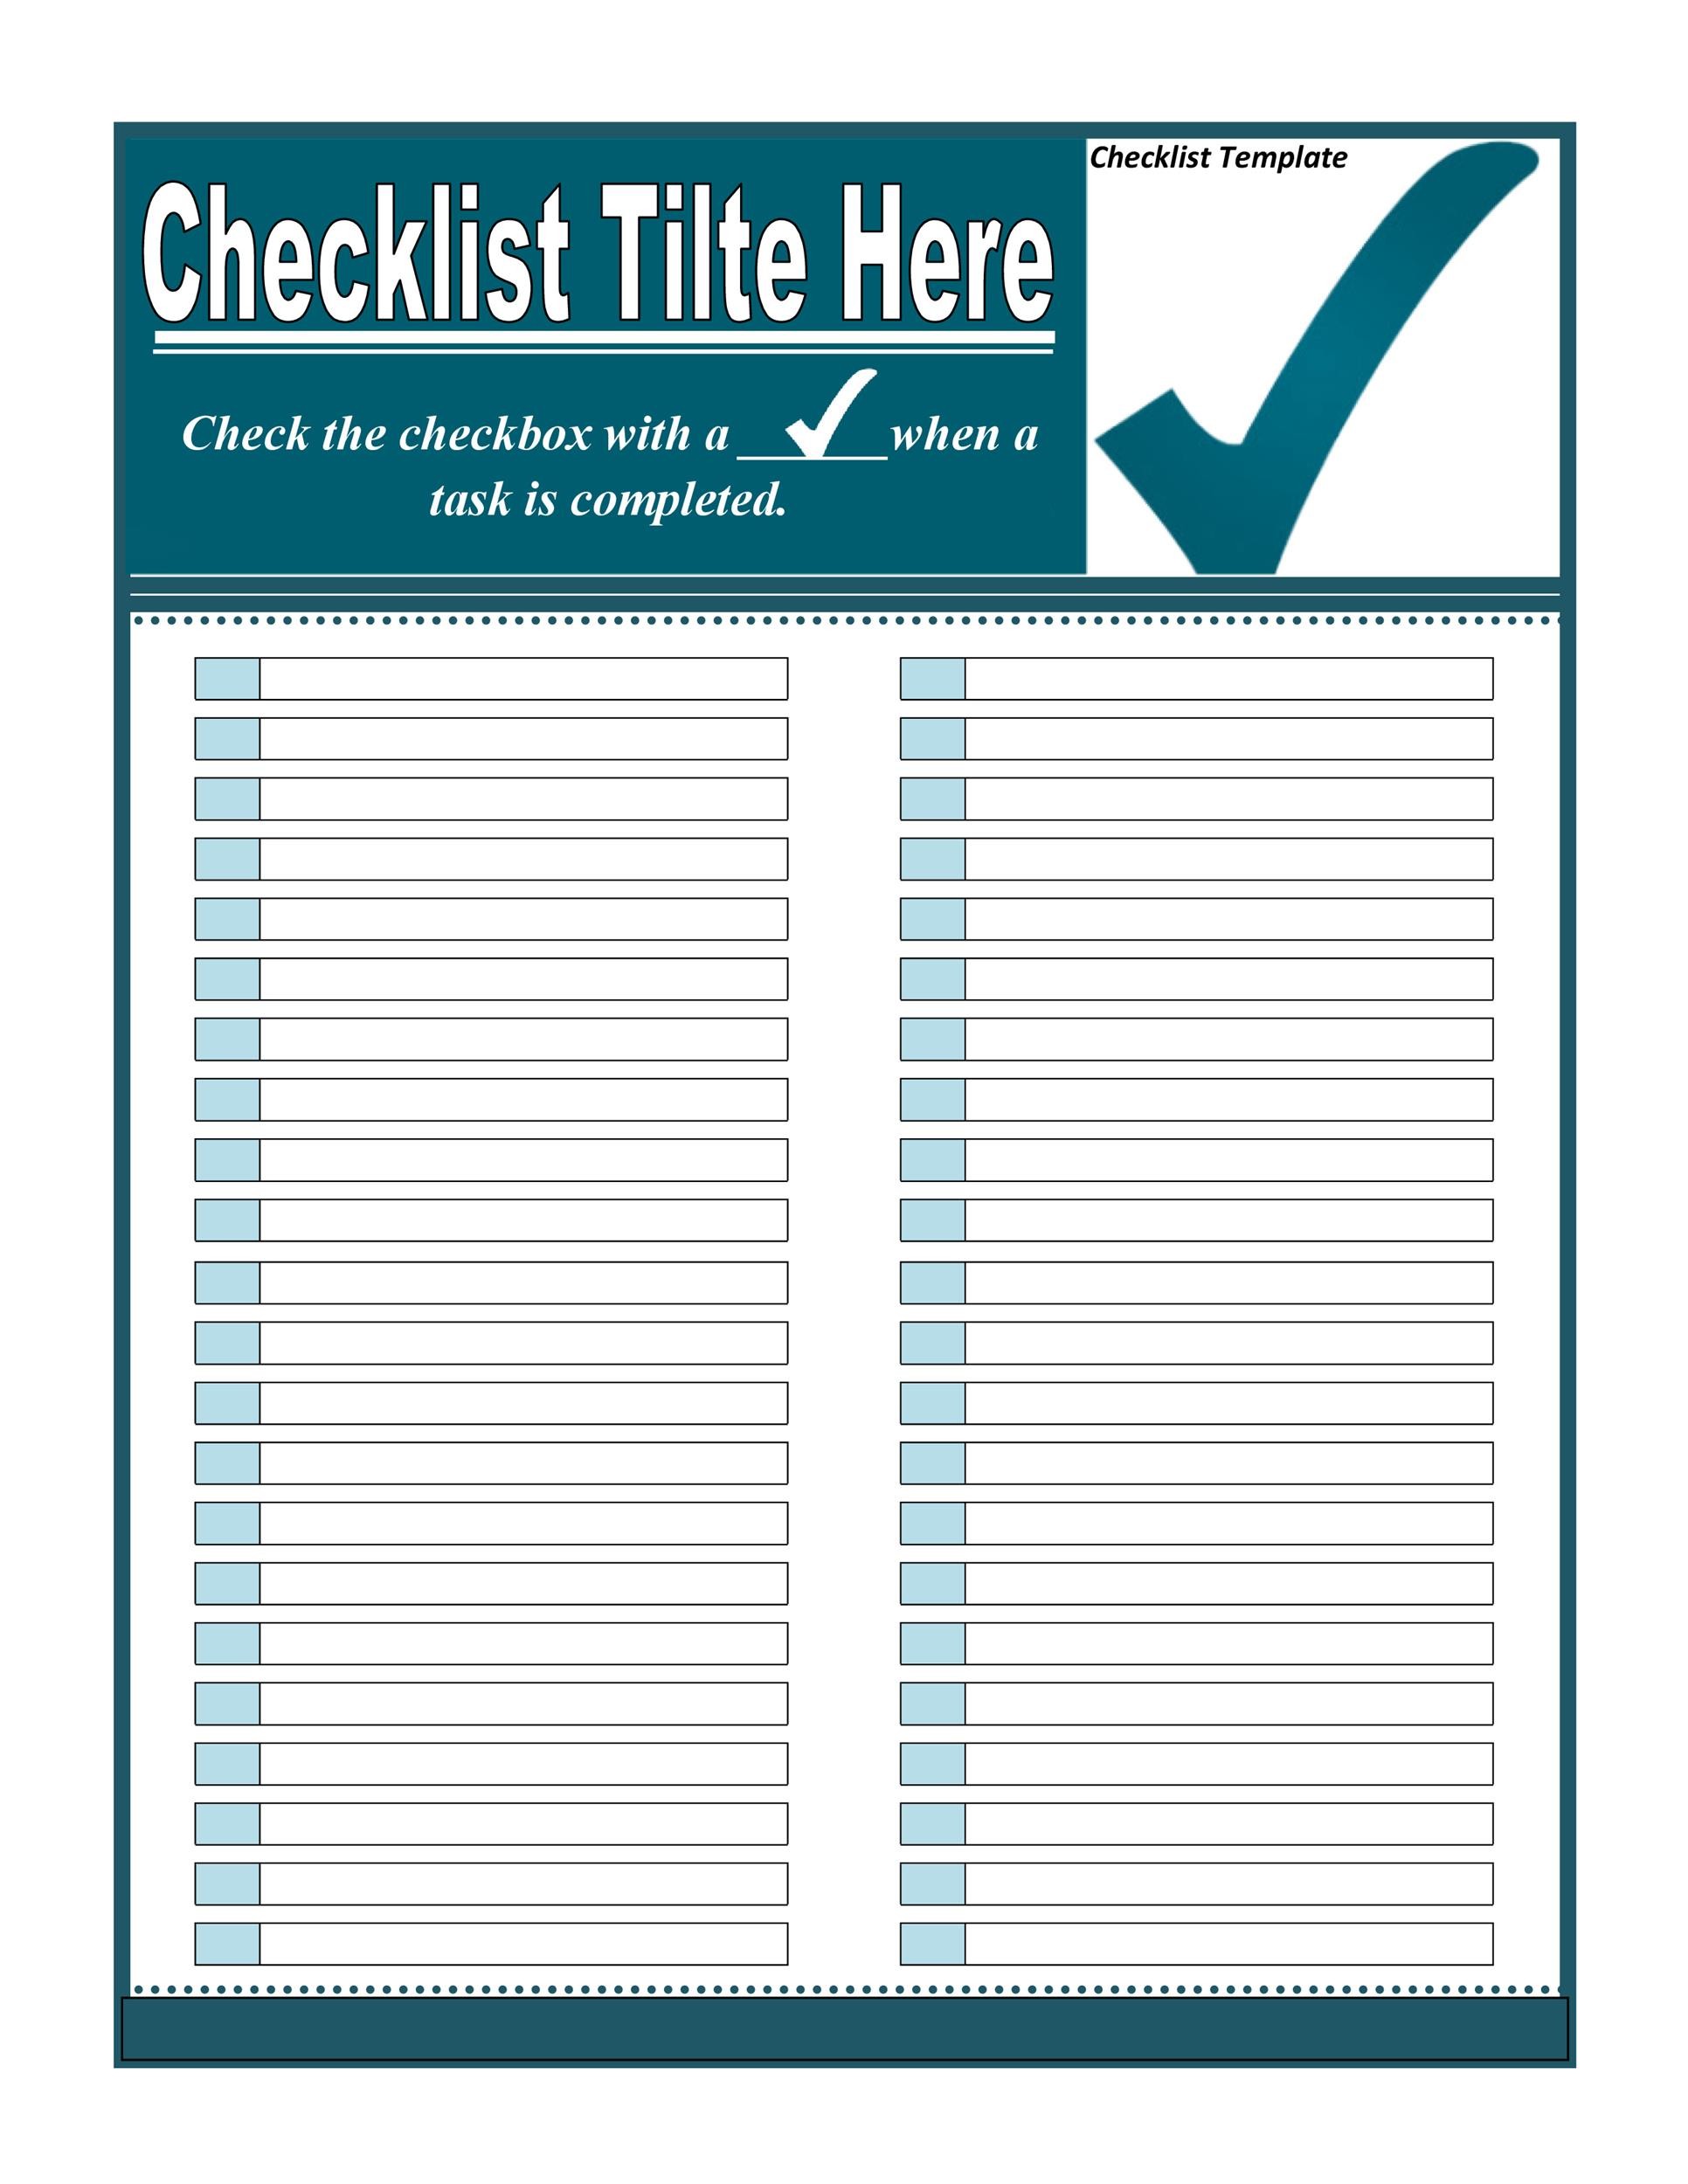 customizable-blank-checklist-template